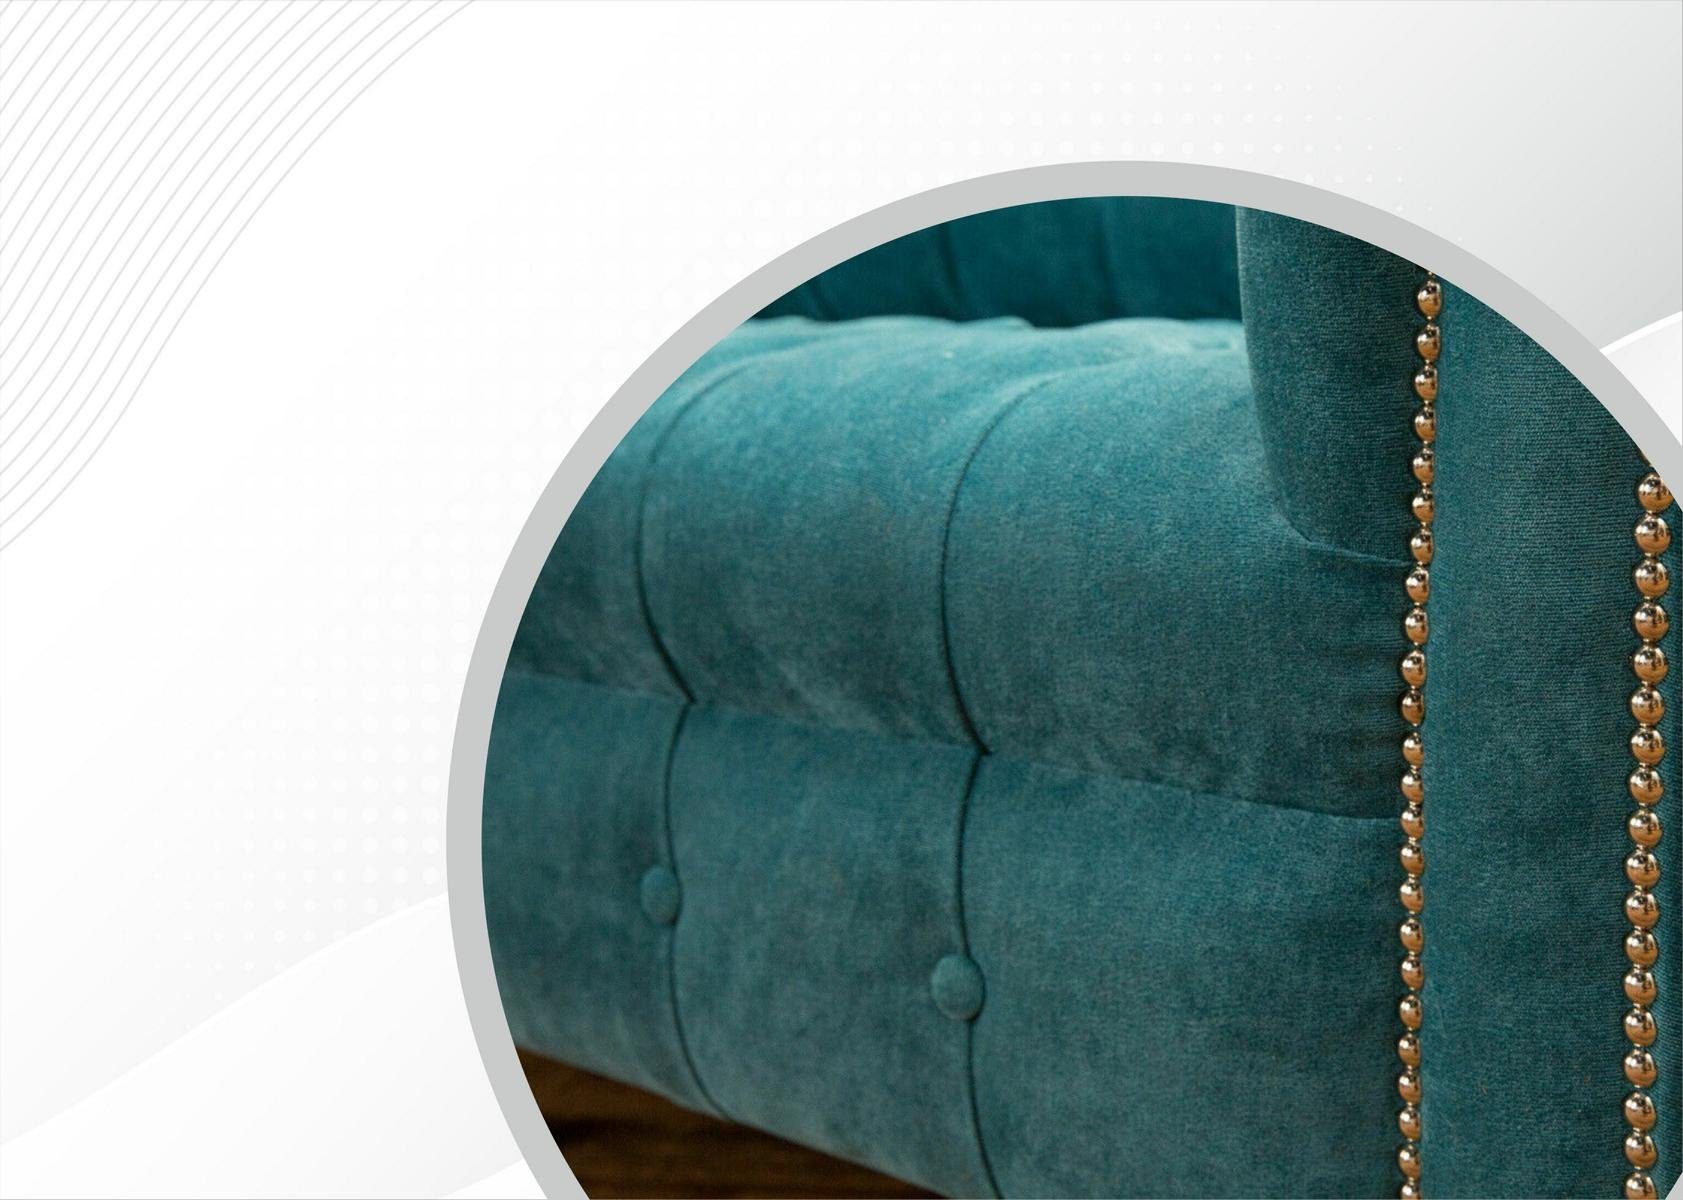 Textil Klassischer JVmoebel in Chesterfield Polster Made 3 Turkis Europe Sitzer, Sofa Couch Sofas